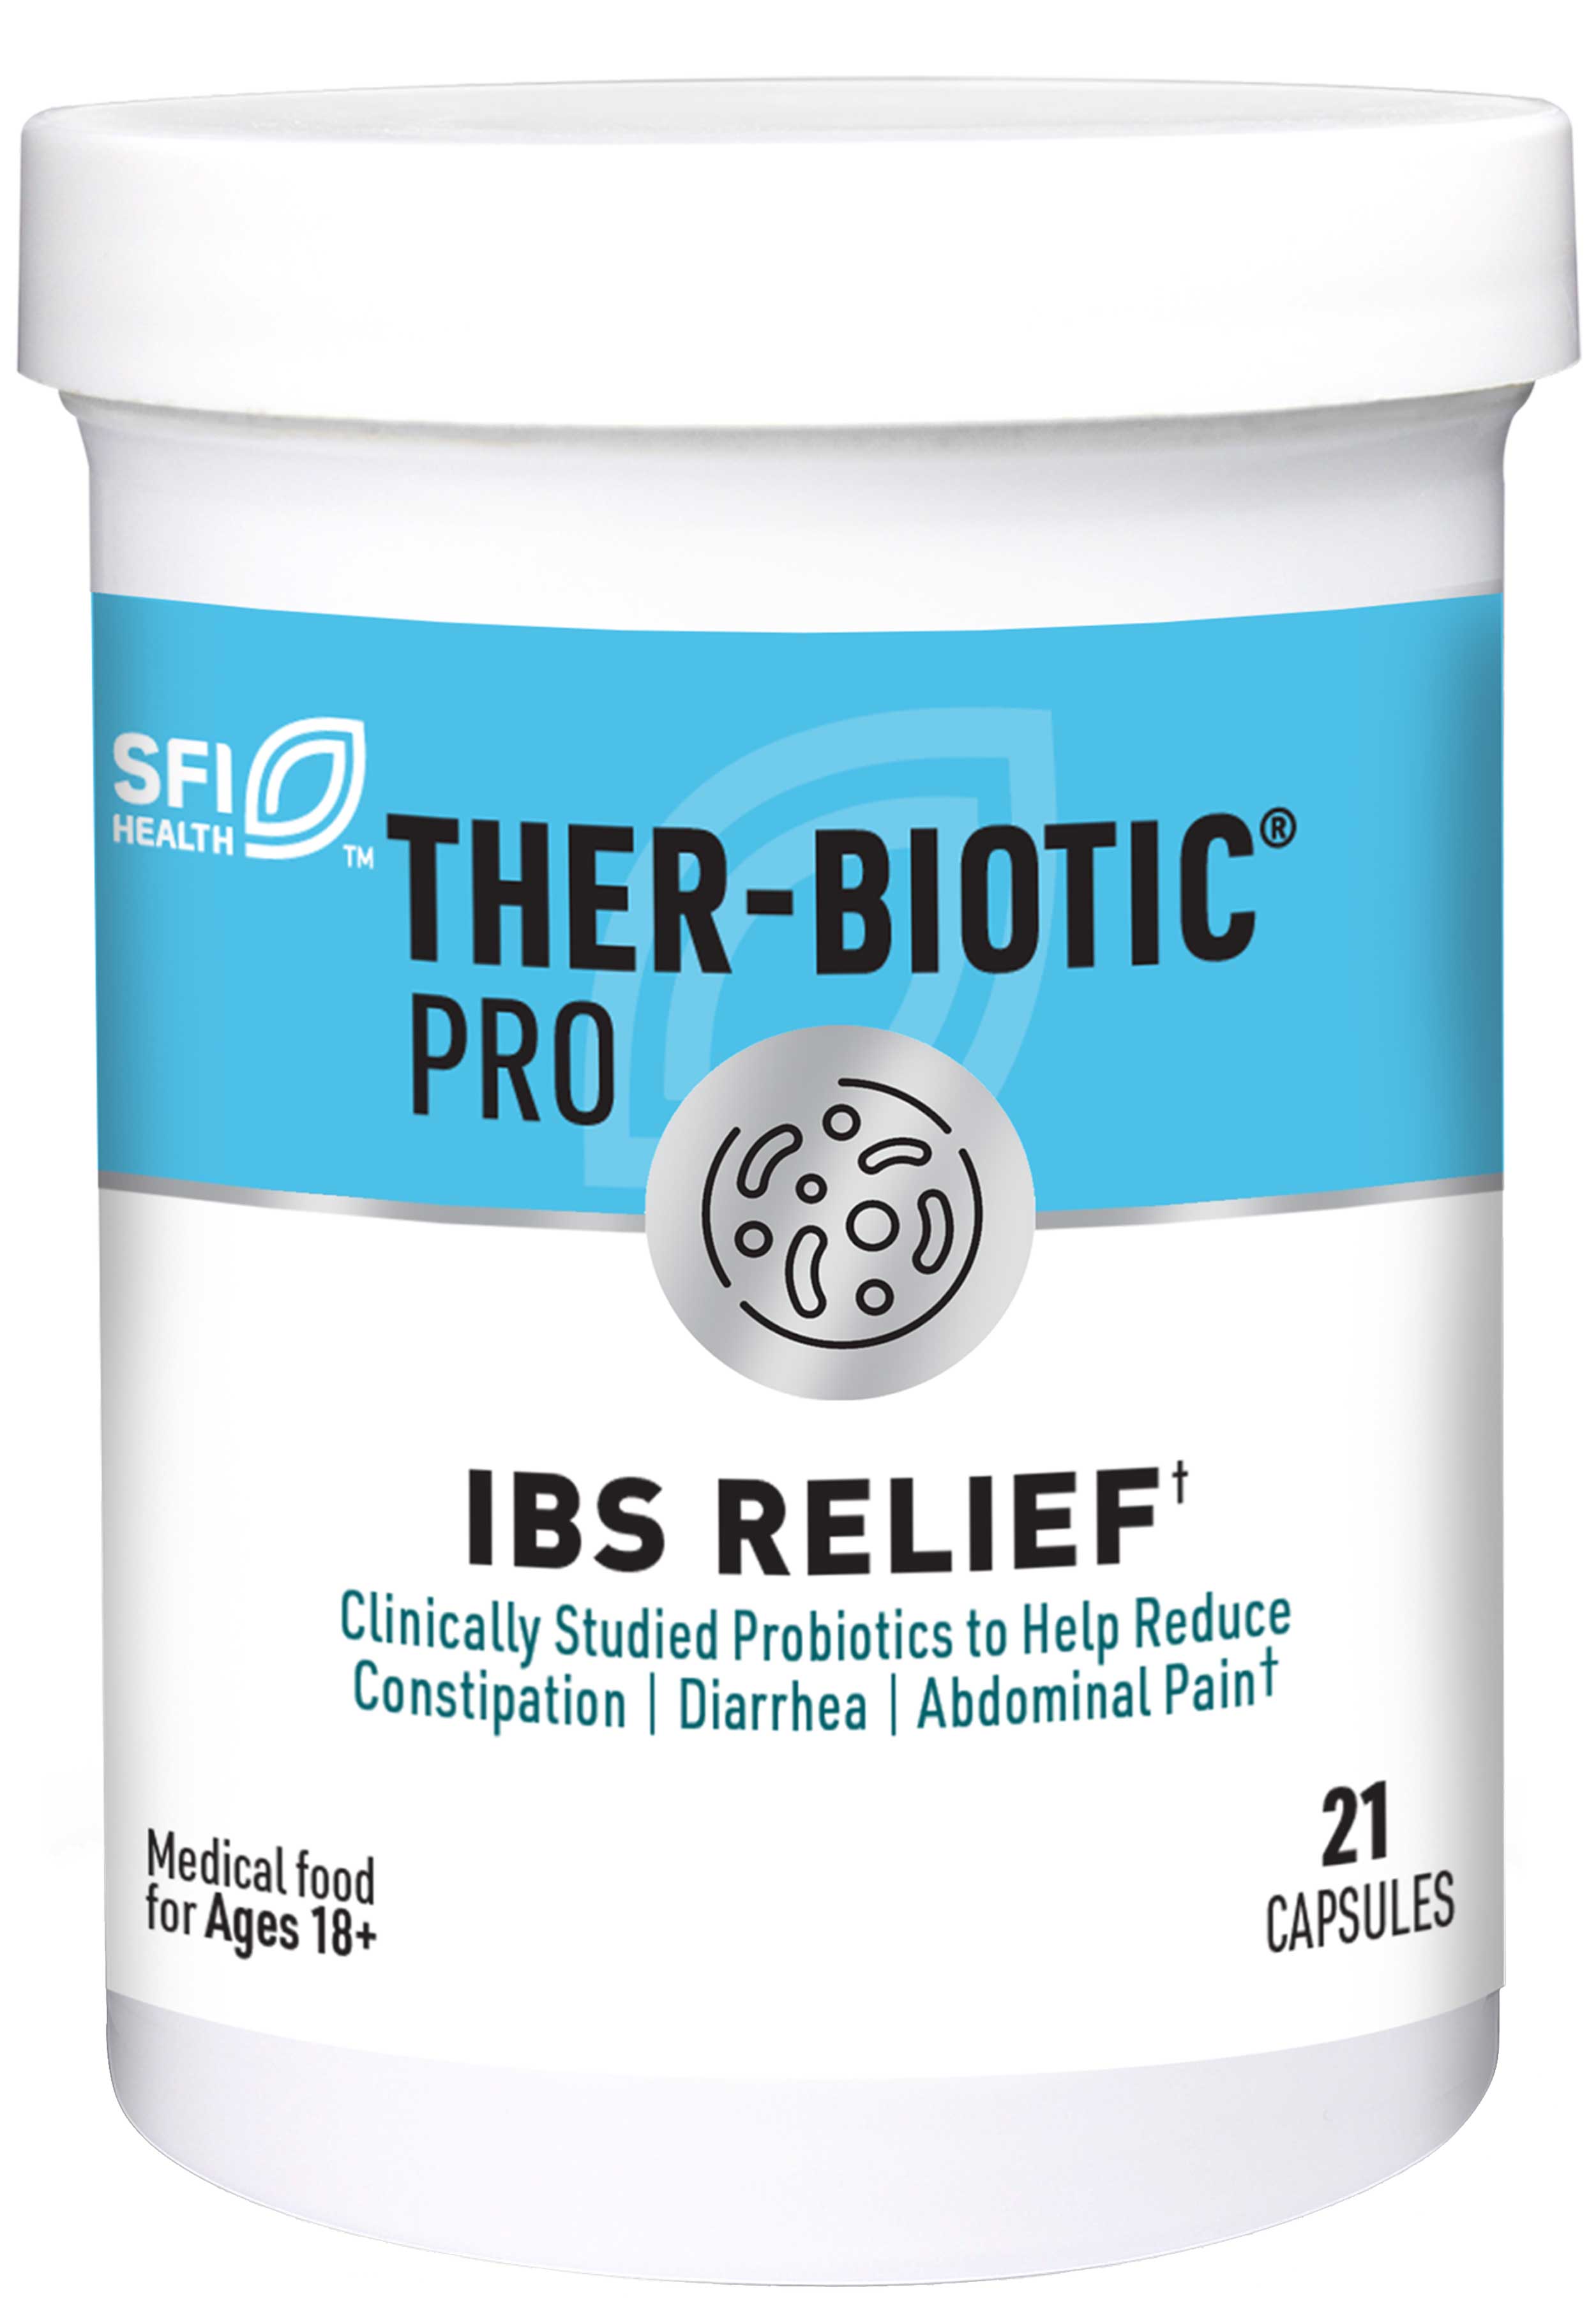 Klaire Labs Ther-Biotic Pro® IBS Relief